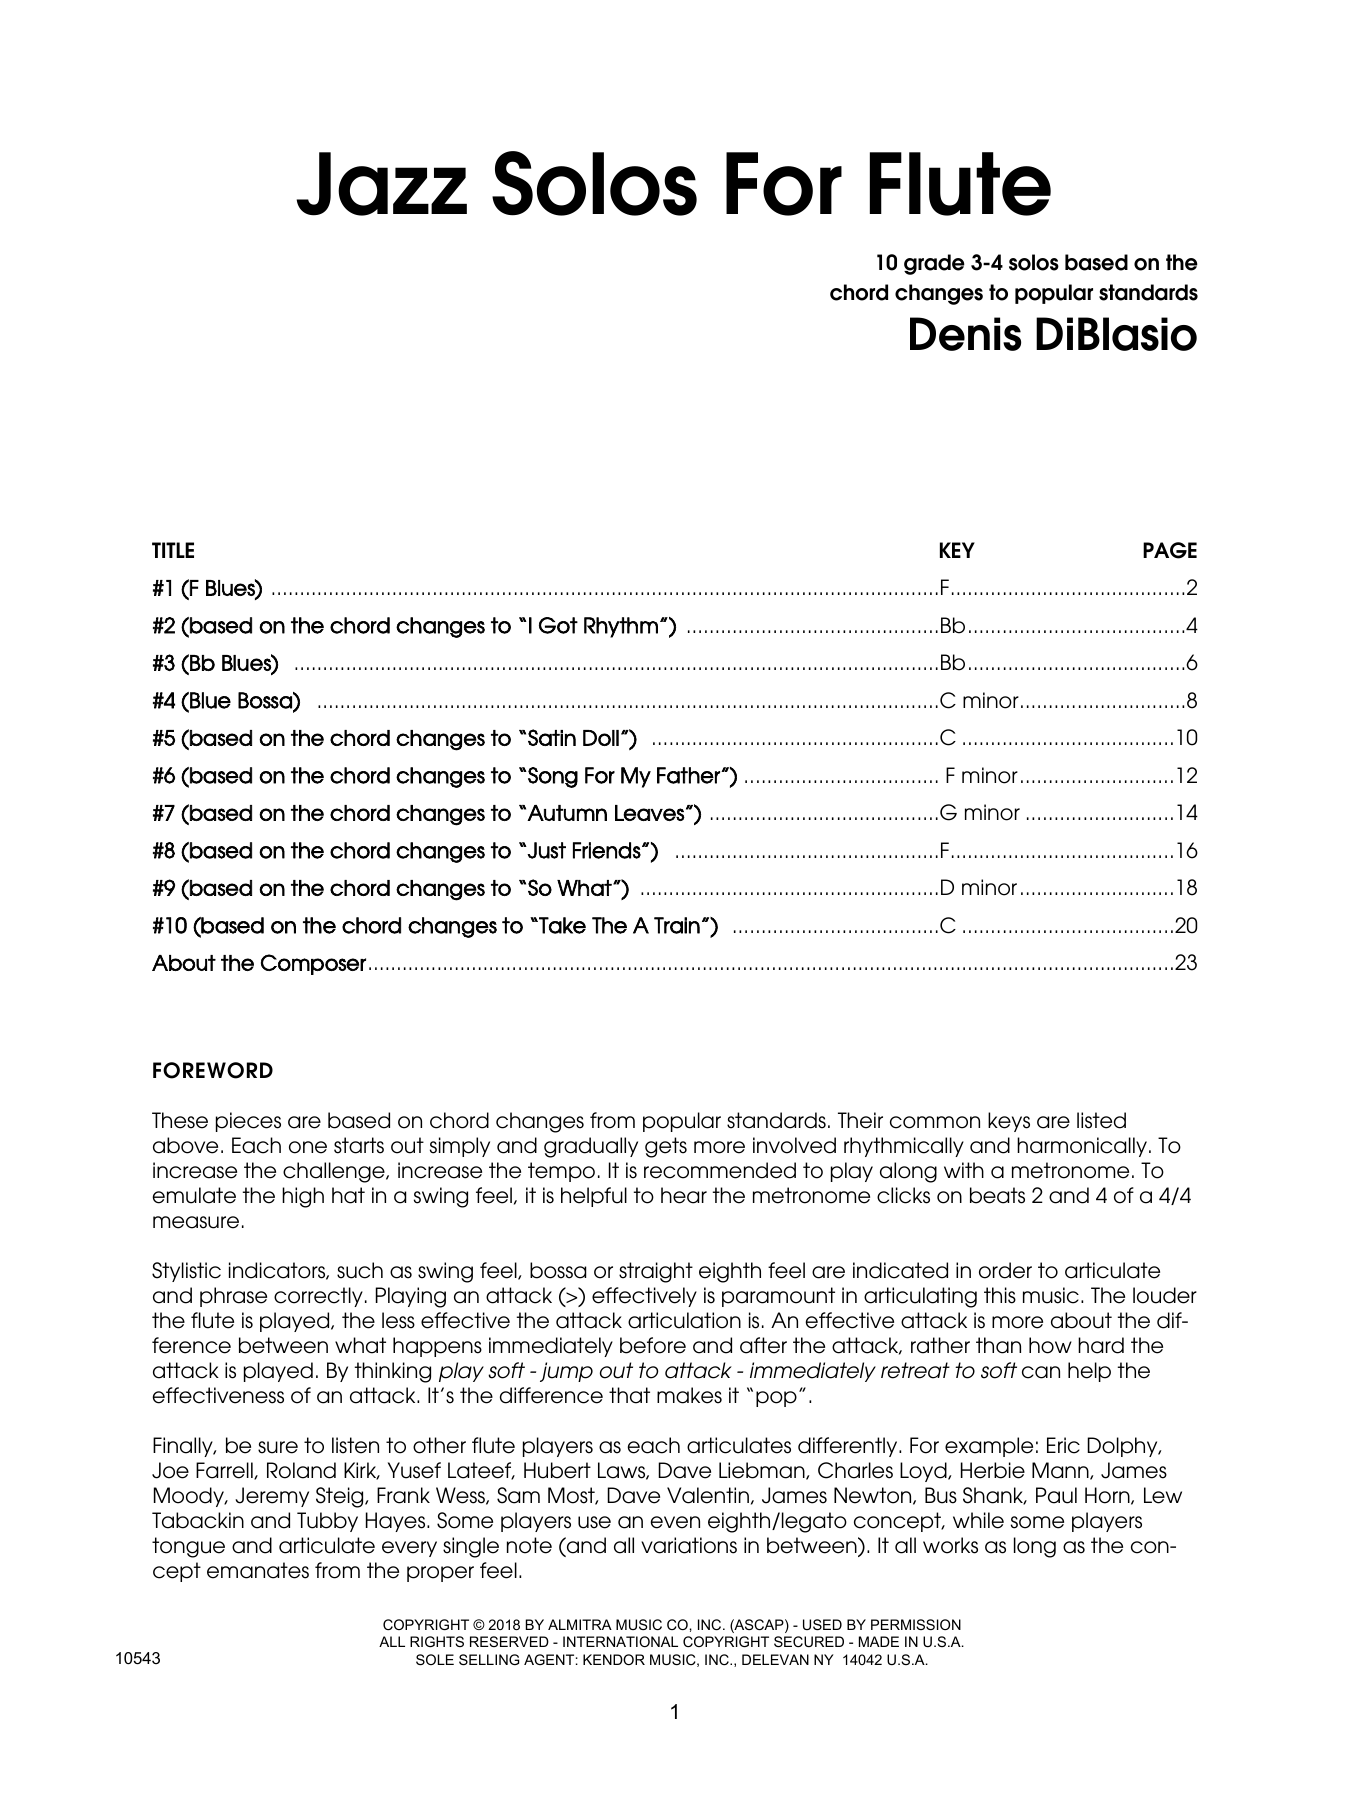 Download Denis DiBlasio Jazz Solos For Flute Sheet Music